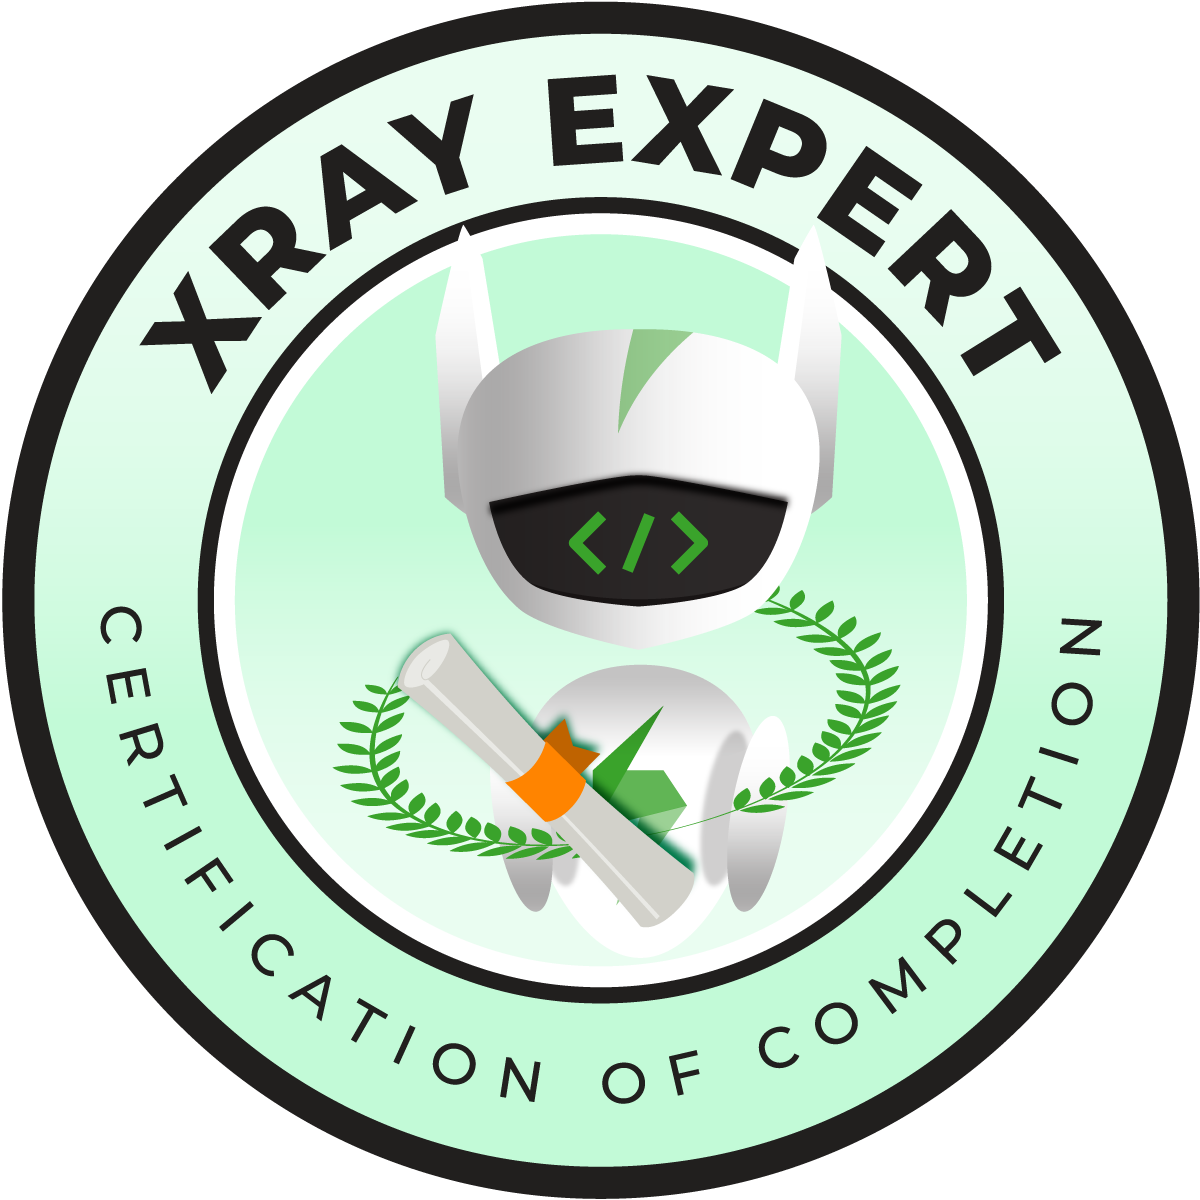 Certification Xray expert